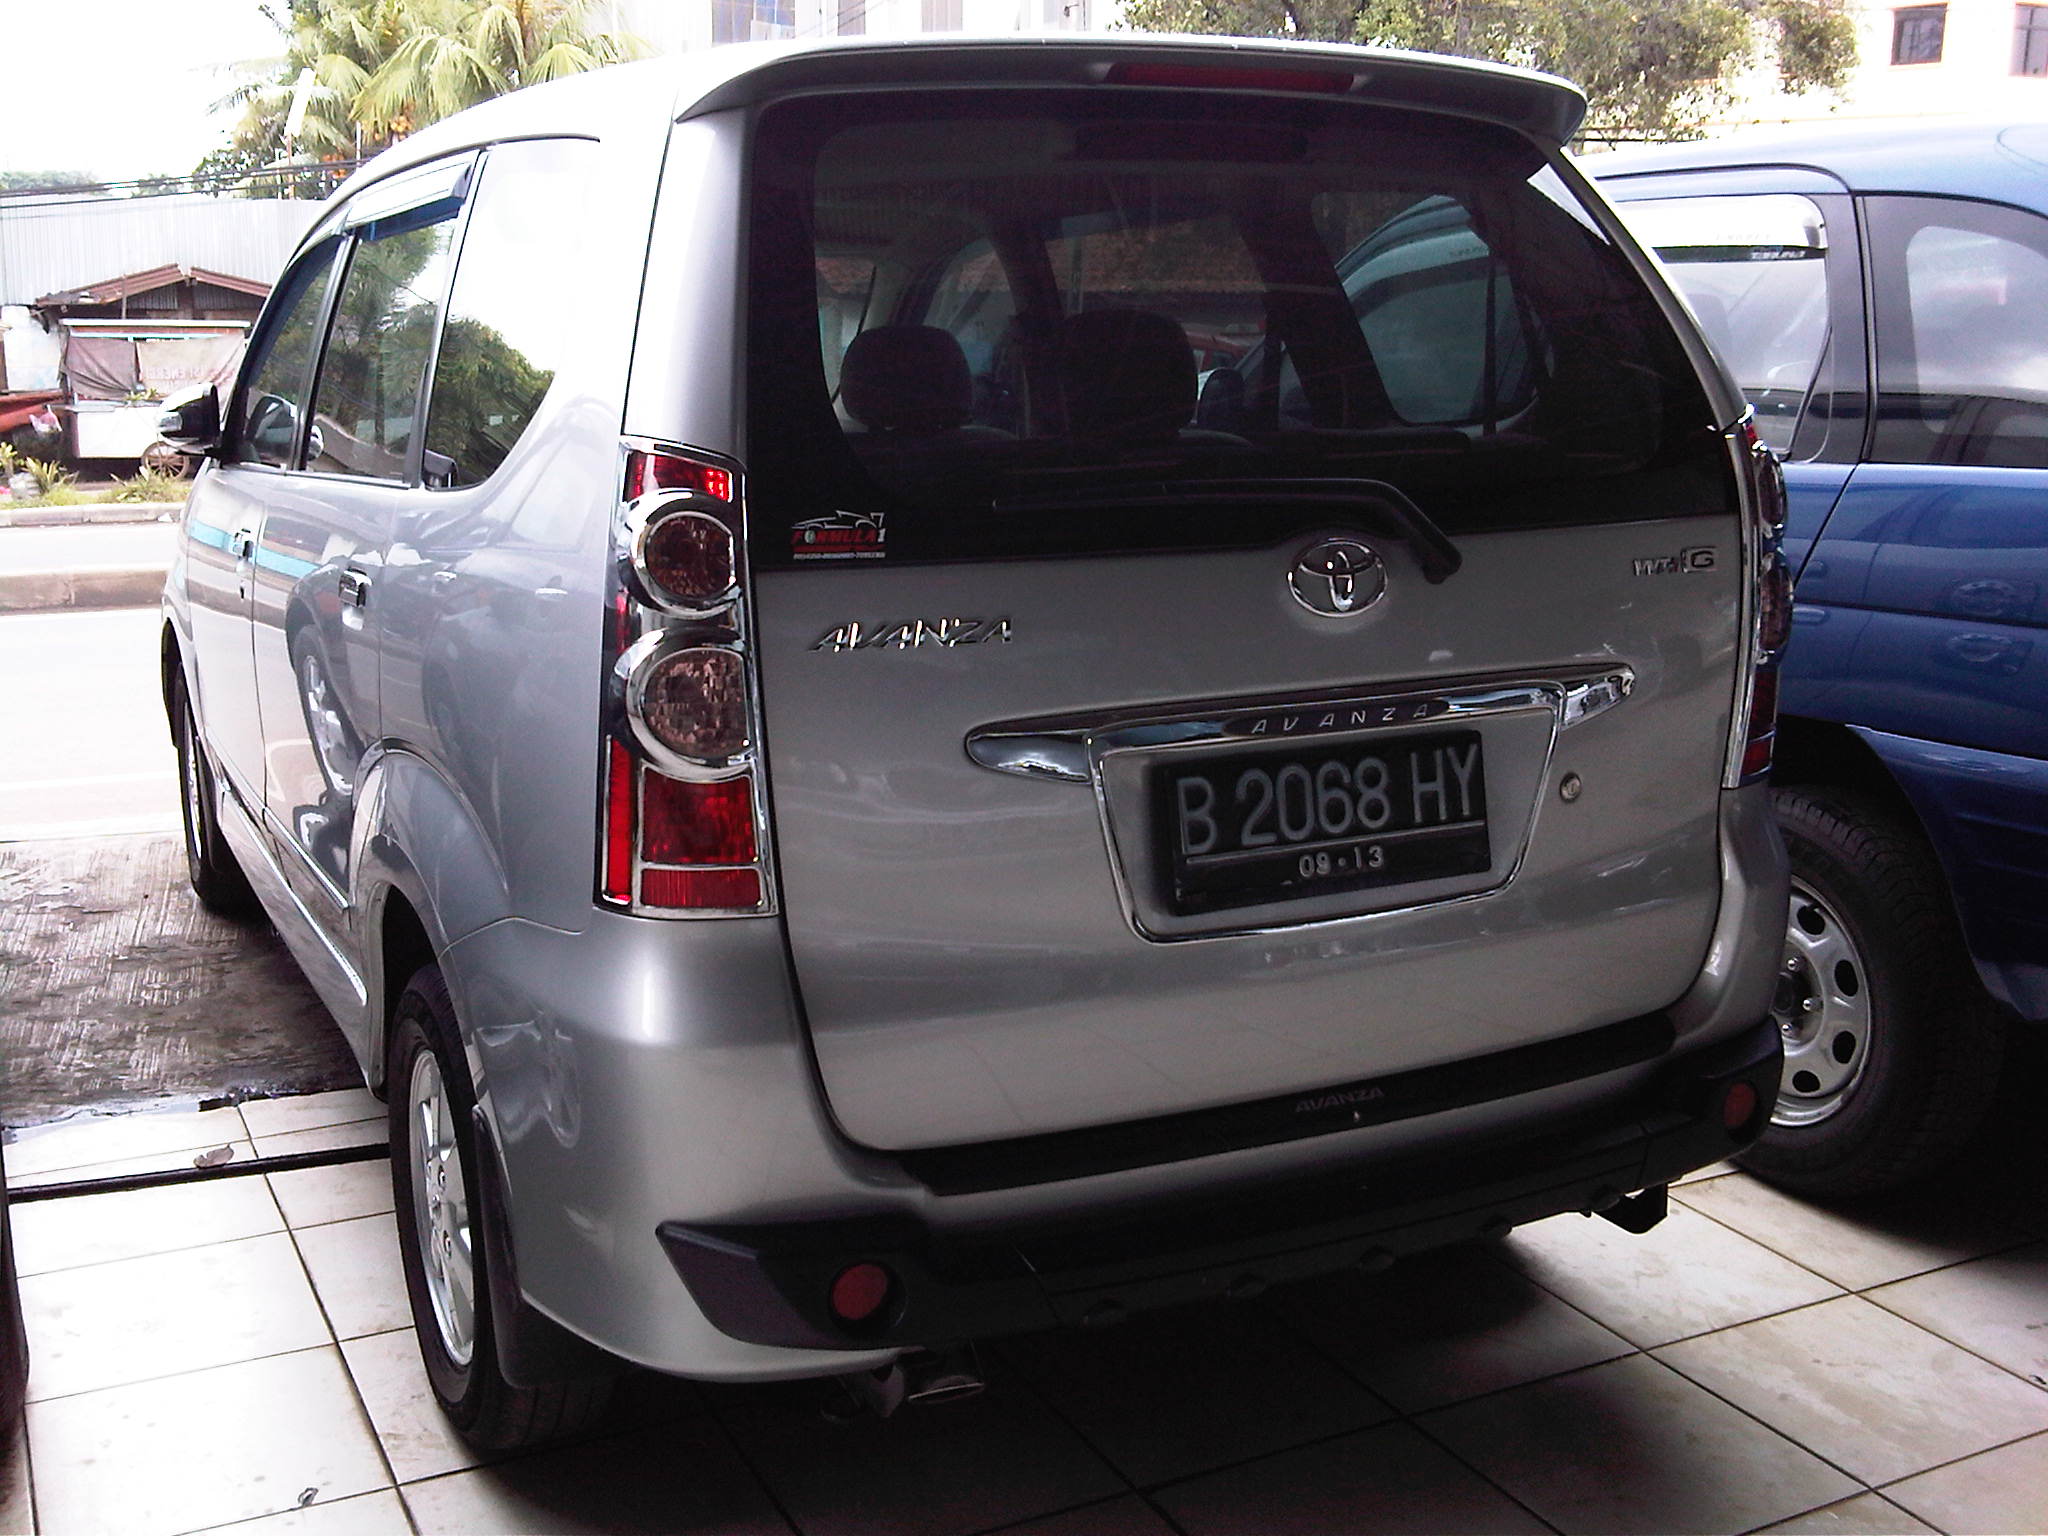 City Tours Sewa Mobil Avanza Murah Di Jakarta Miliarthacoid